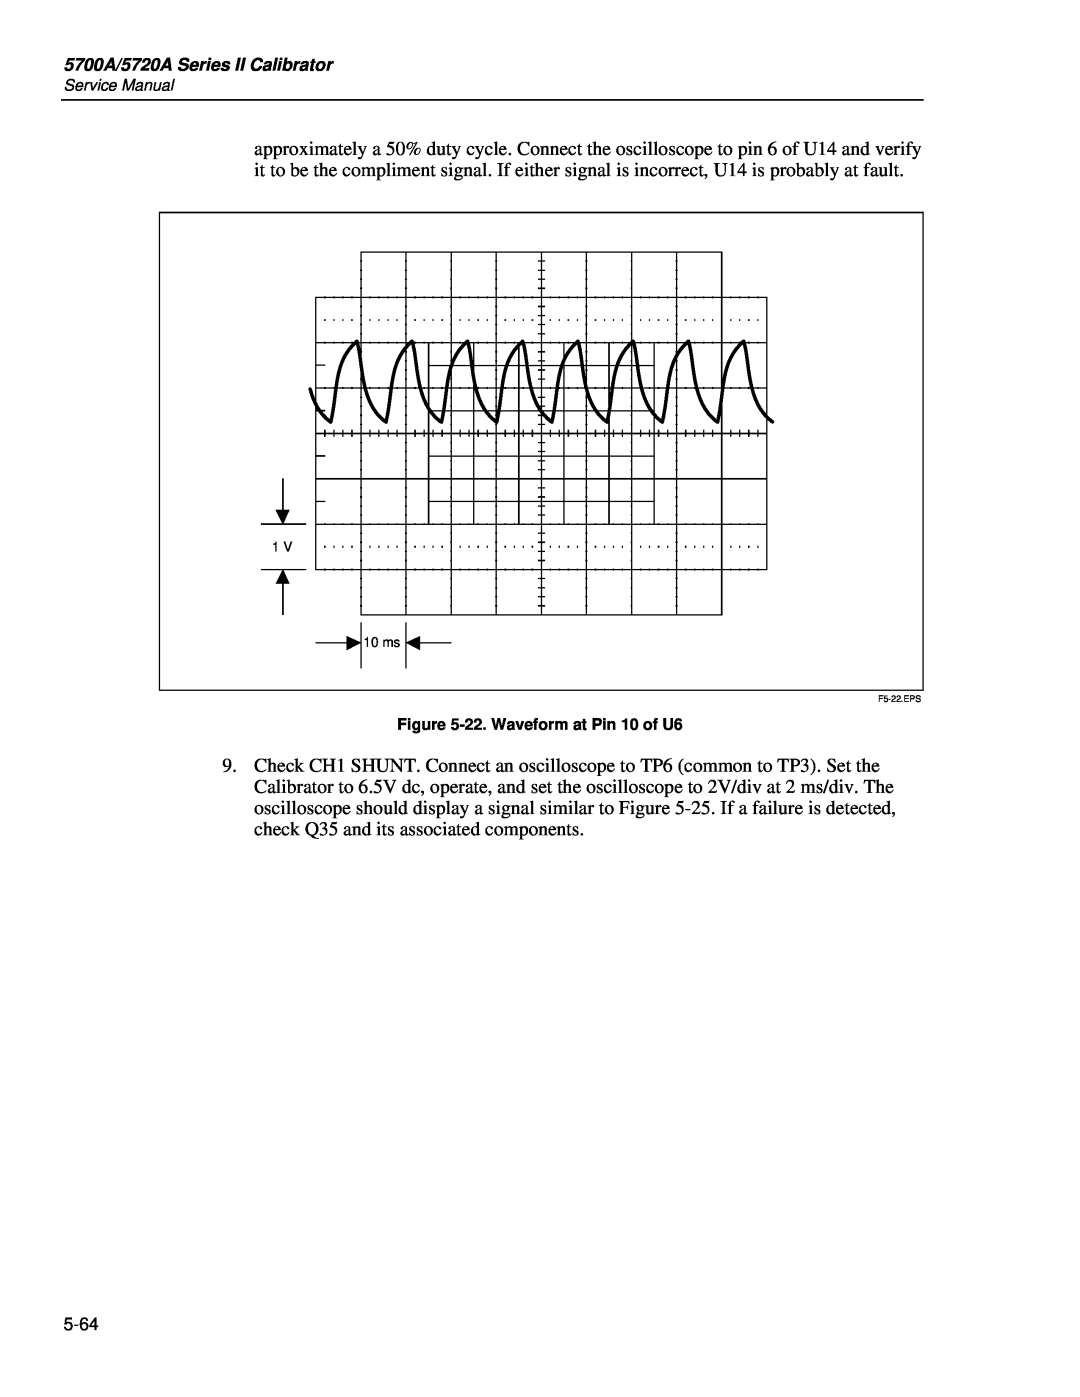 Fluke 5720A service manual 22. Waveform at Pin 10 of U6, F5-22.EPS 